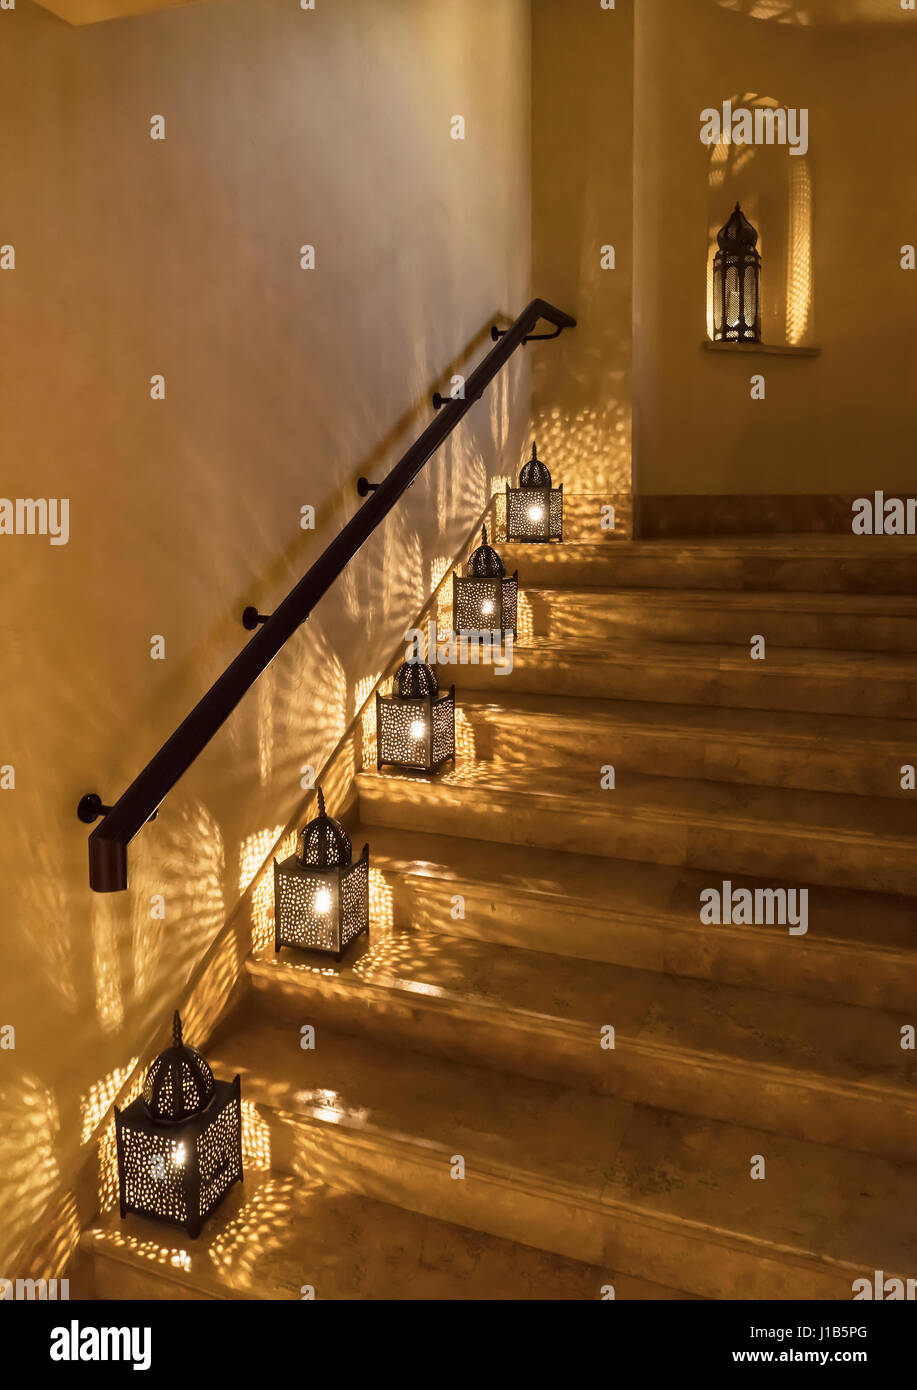 Lanterns illuminating staircase Stock Photo - Alamy